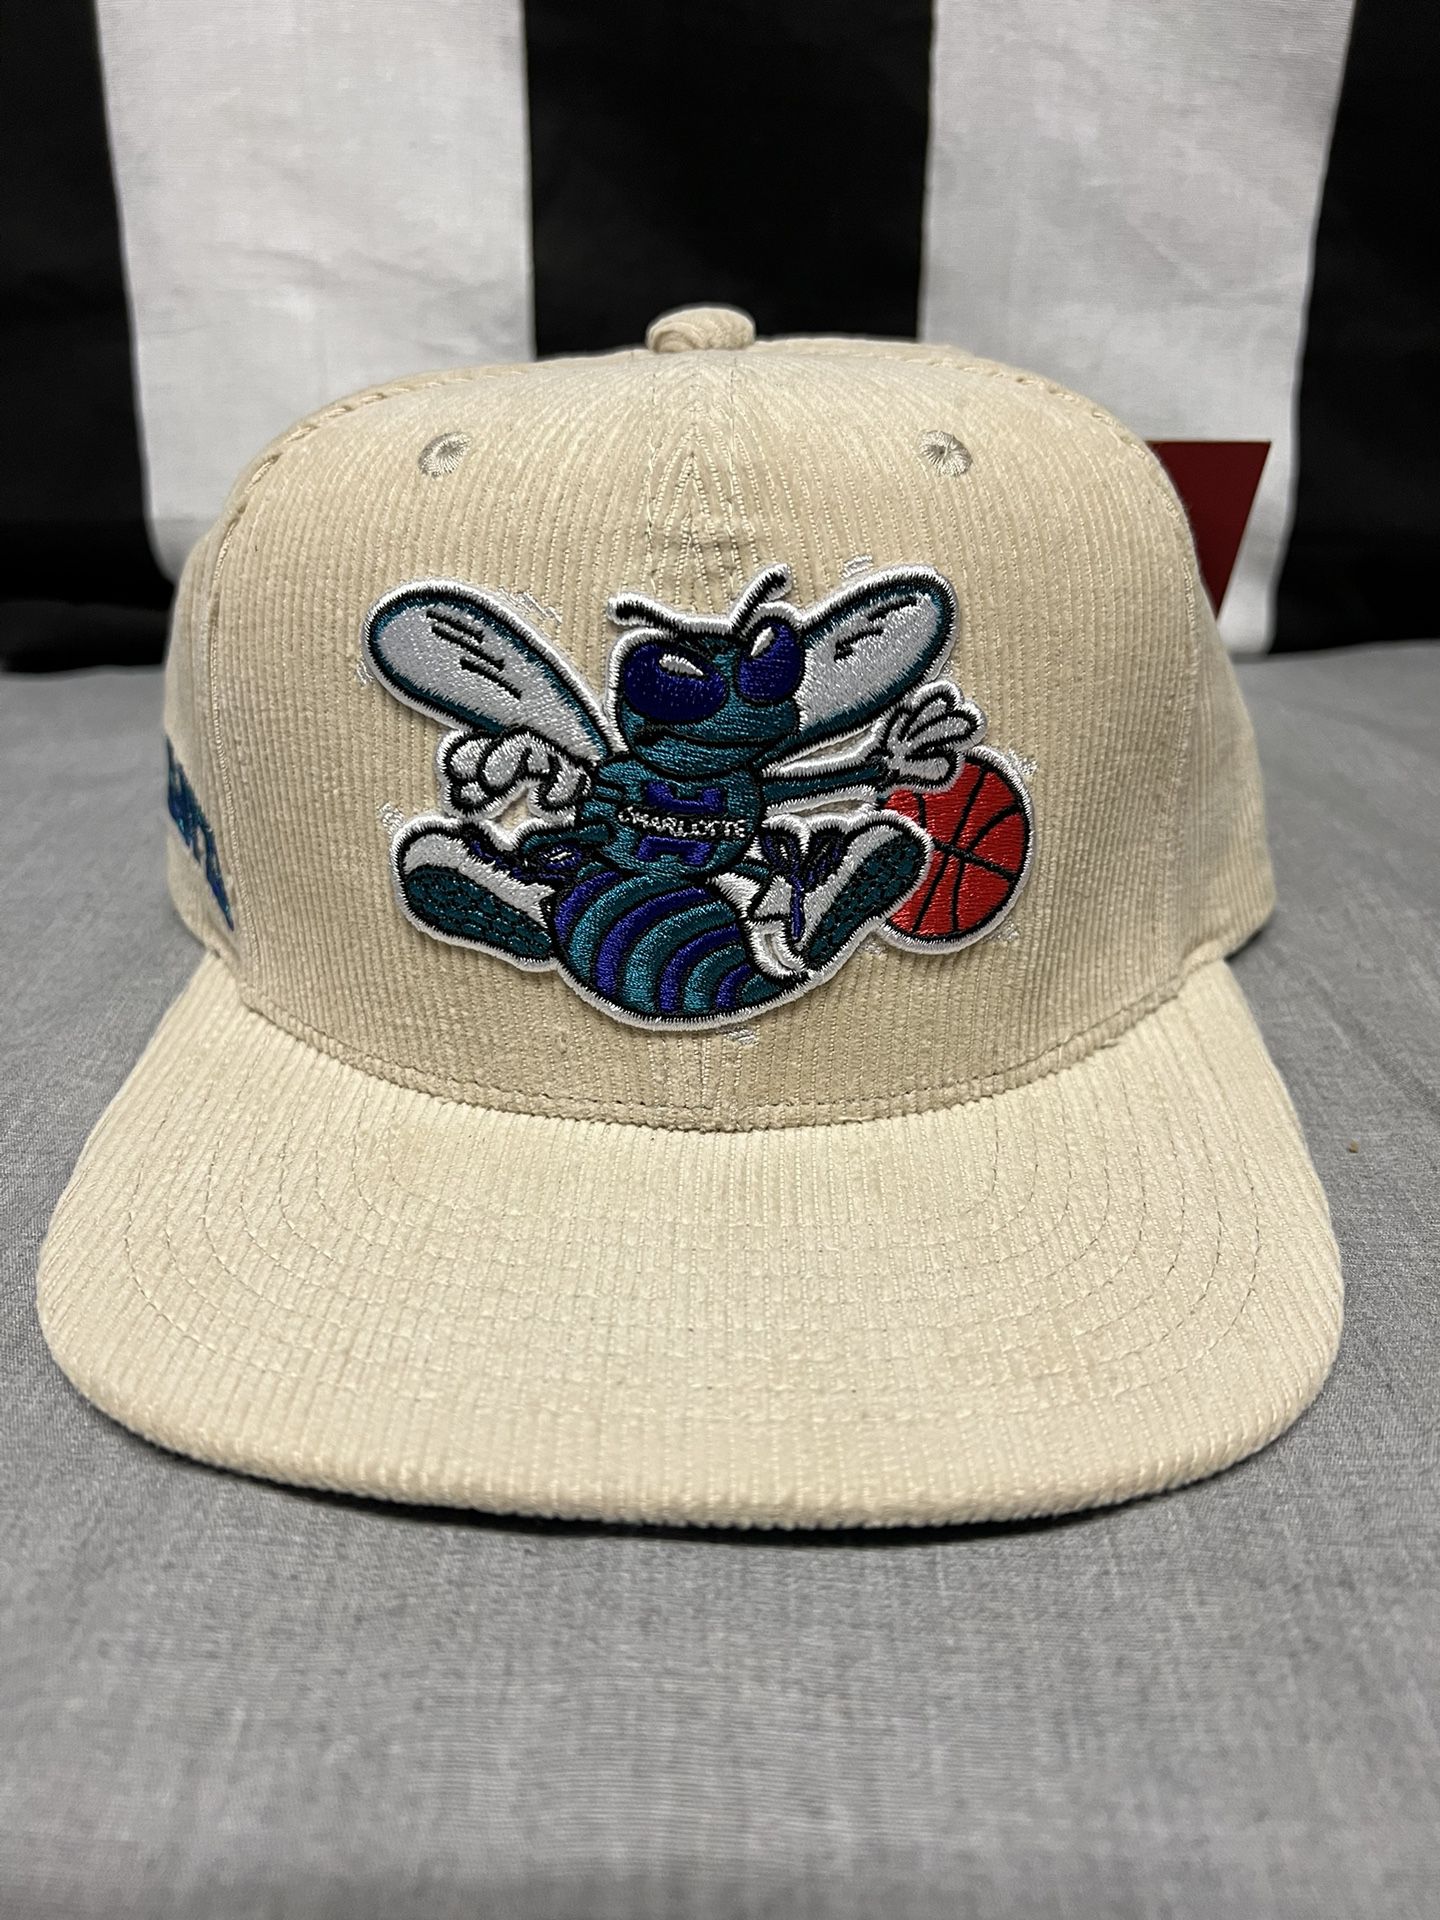 Mitchell & Ness Hornets Snapback Hat